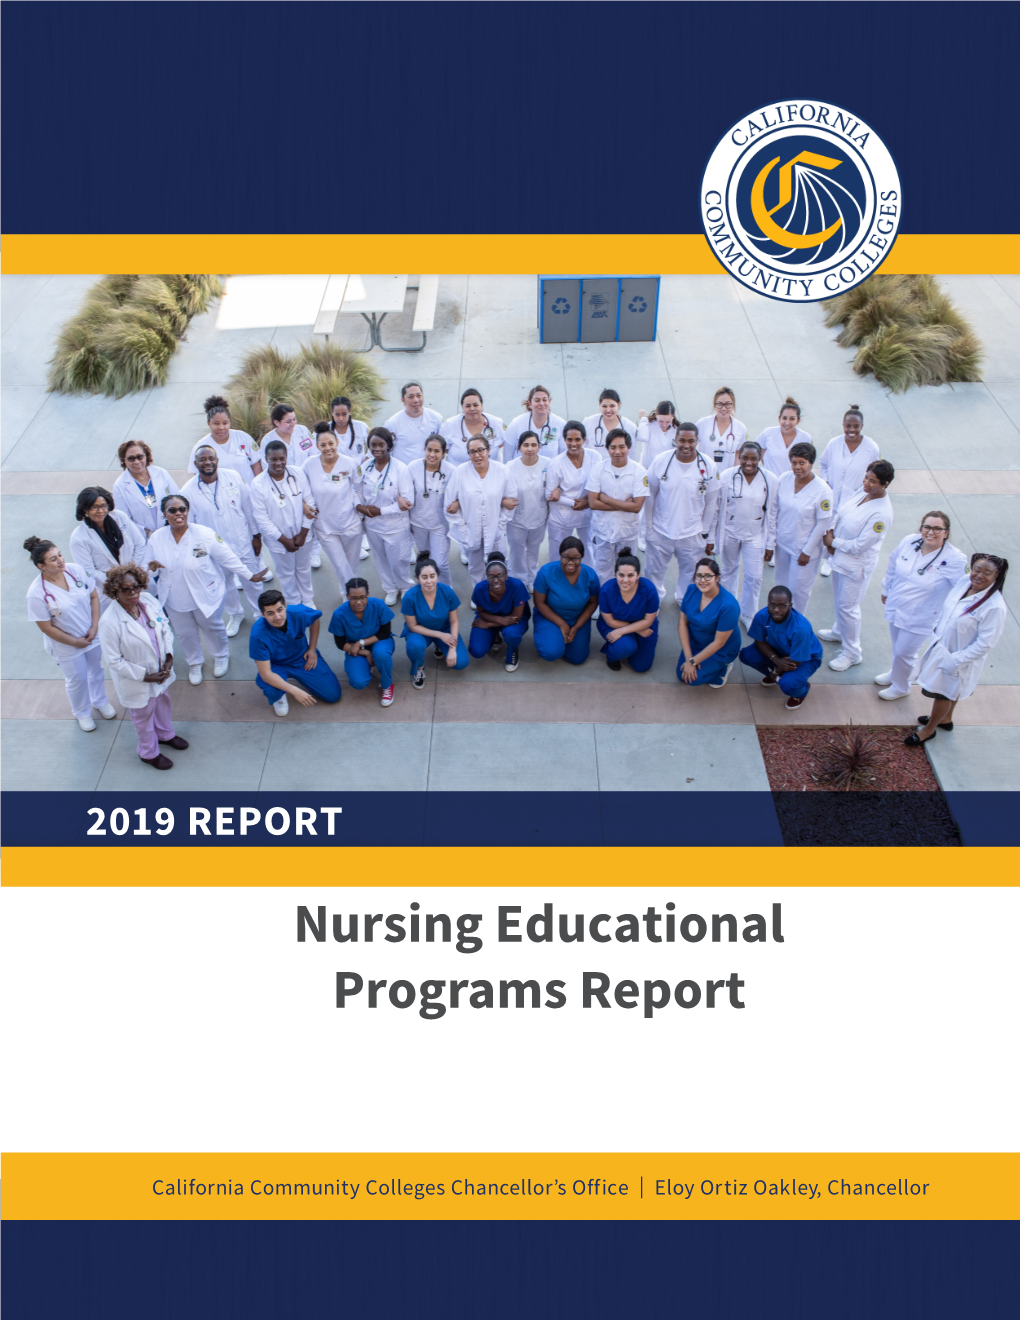 2019 Nursing Educational Programs Report